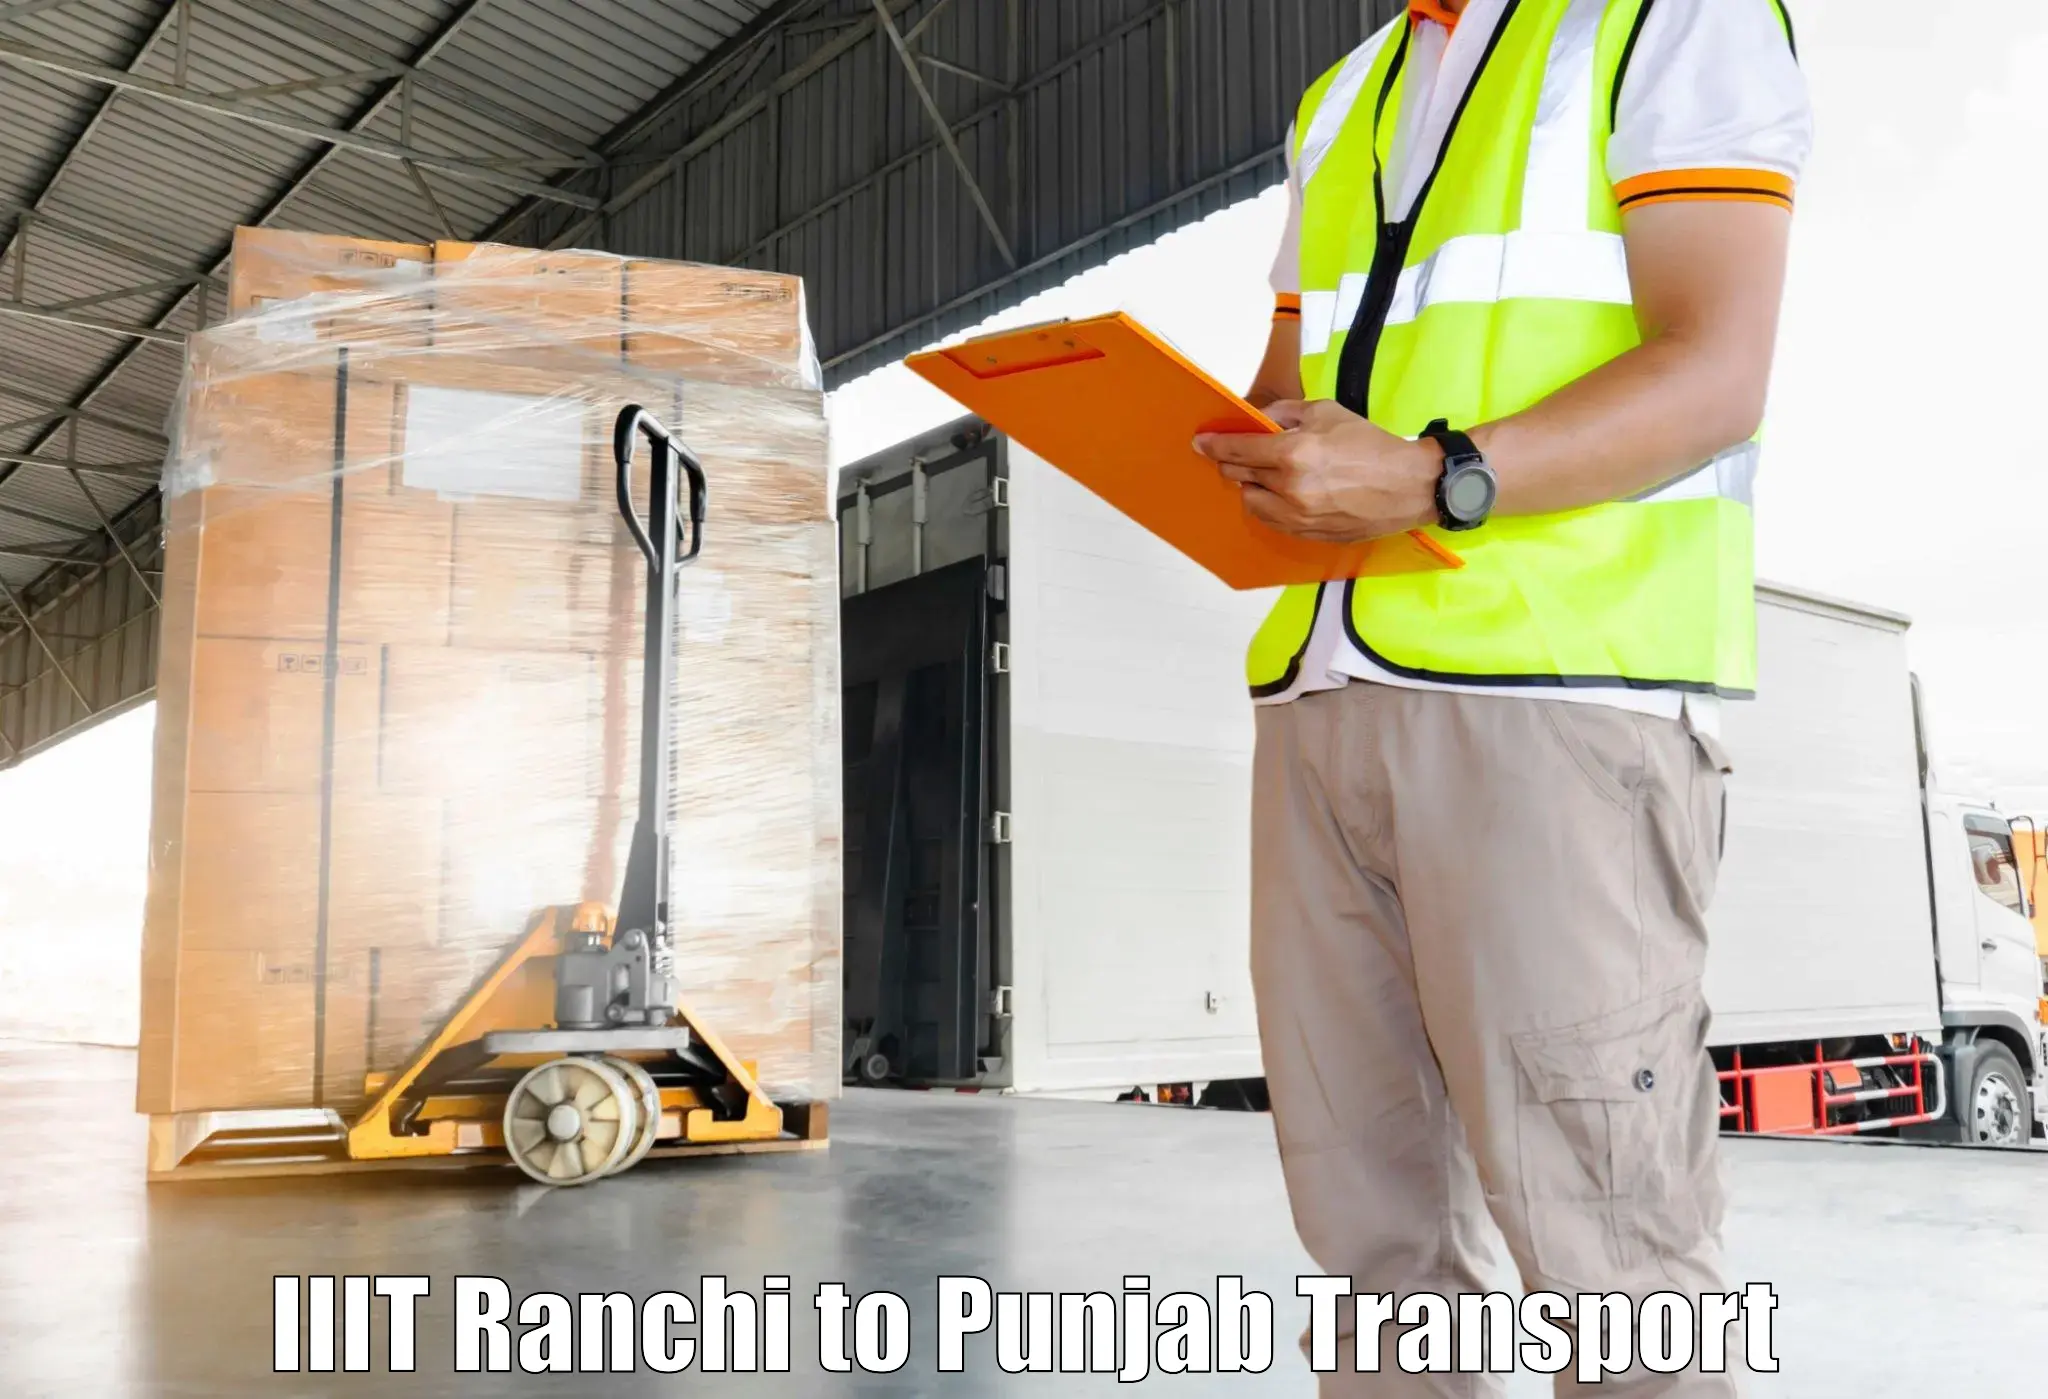 Road transport services IIIT Ranchi to Jalandhar